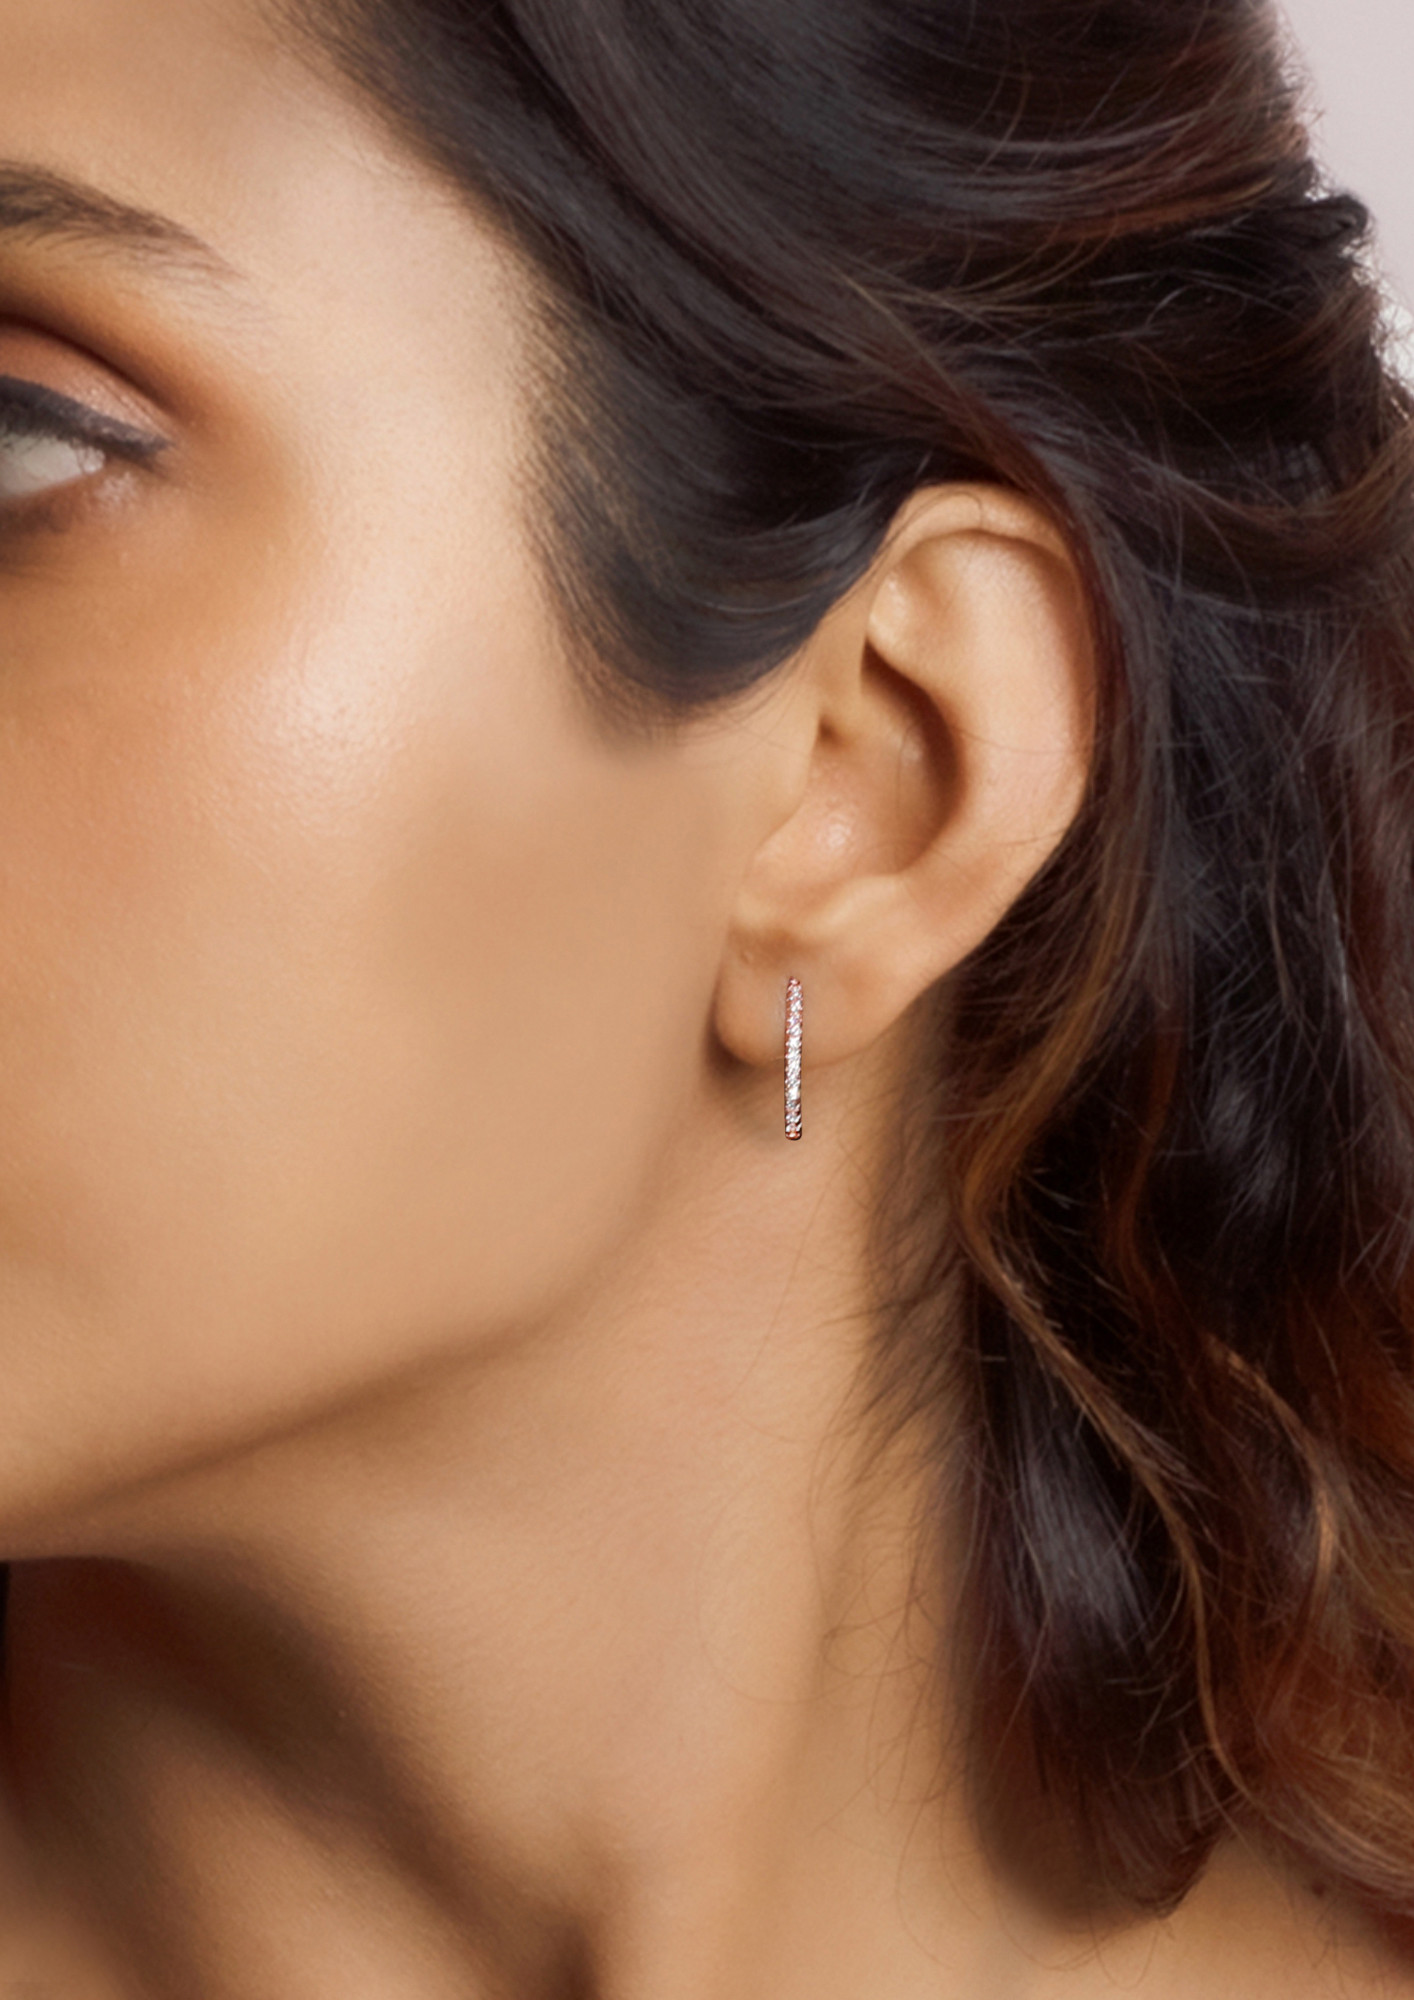 Buy Rose gold Earrings for Women by Ted baker Online  Ajiocom